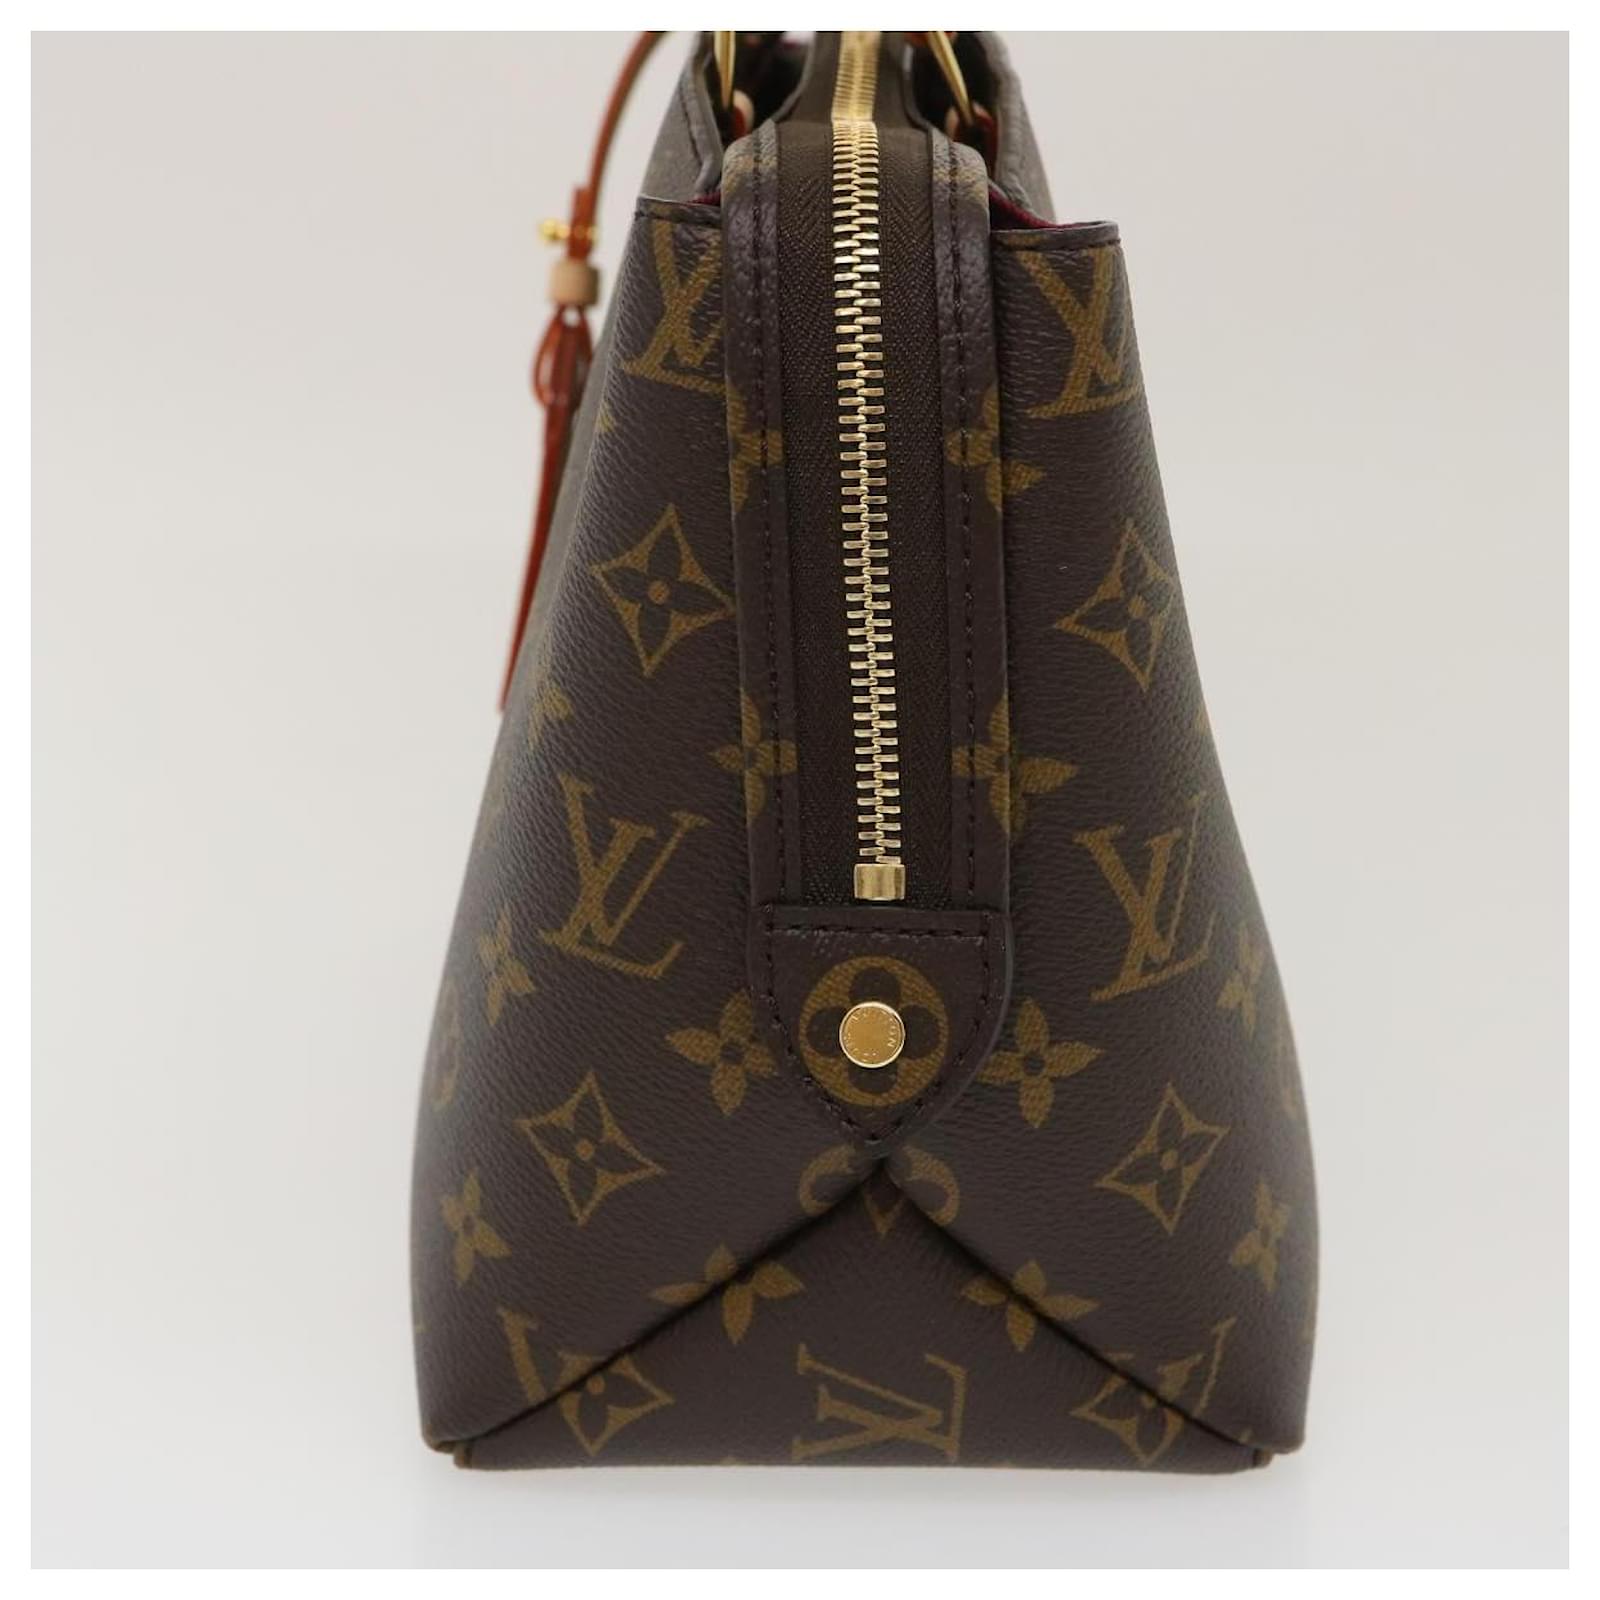 LOUIS VUITTON France Auth W Monogram PM Cherry Leather Tote Handbag TR4184  $4400